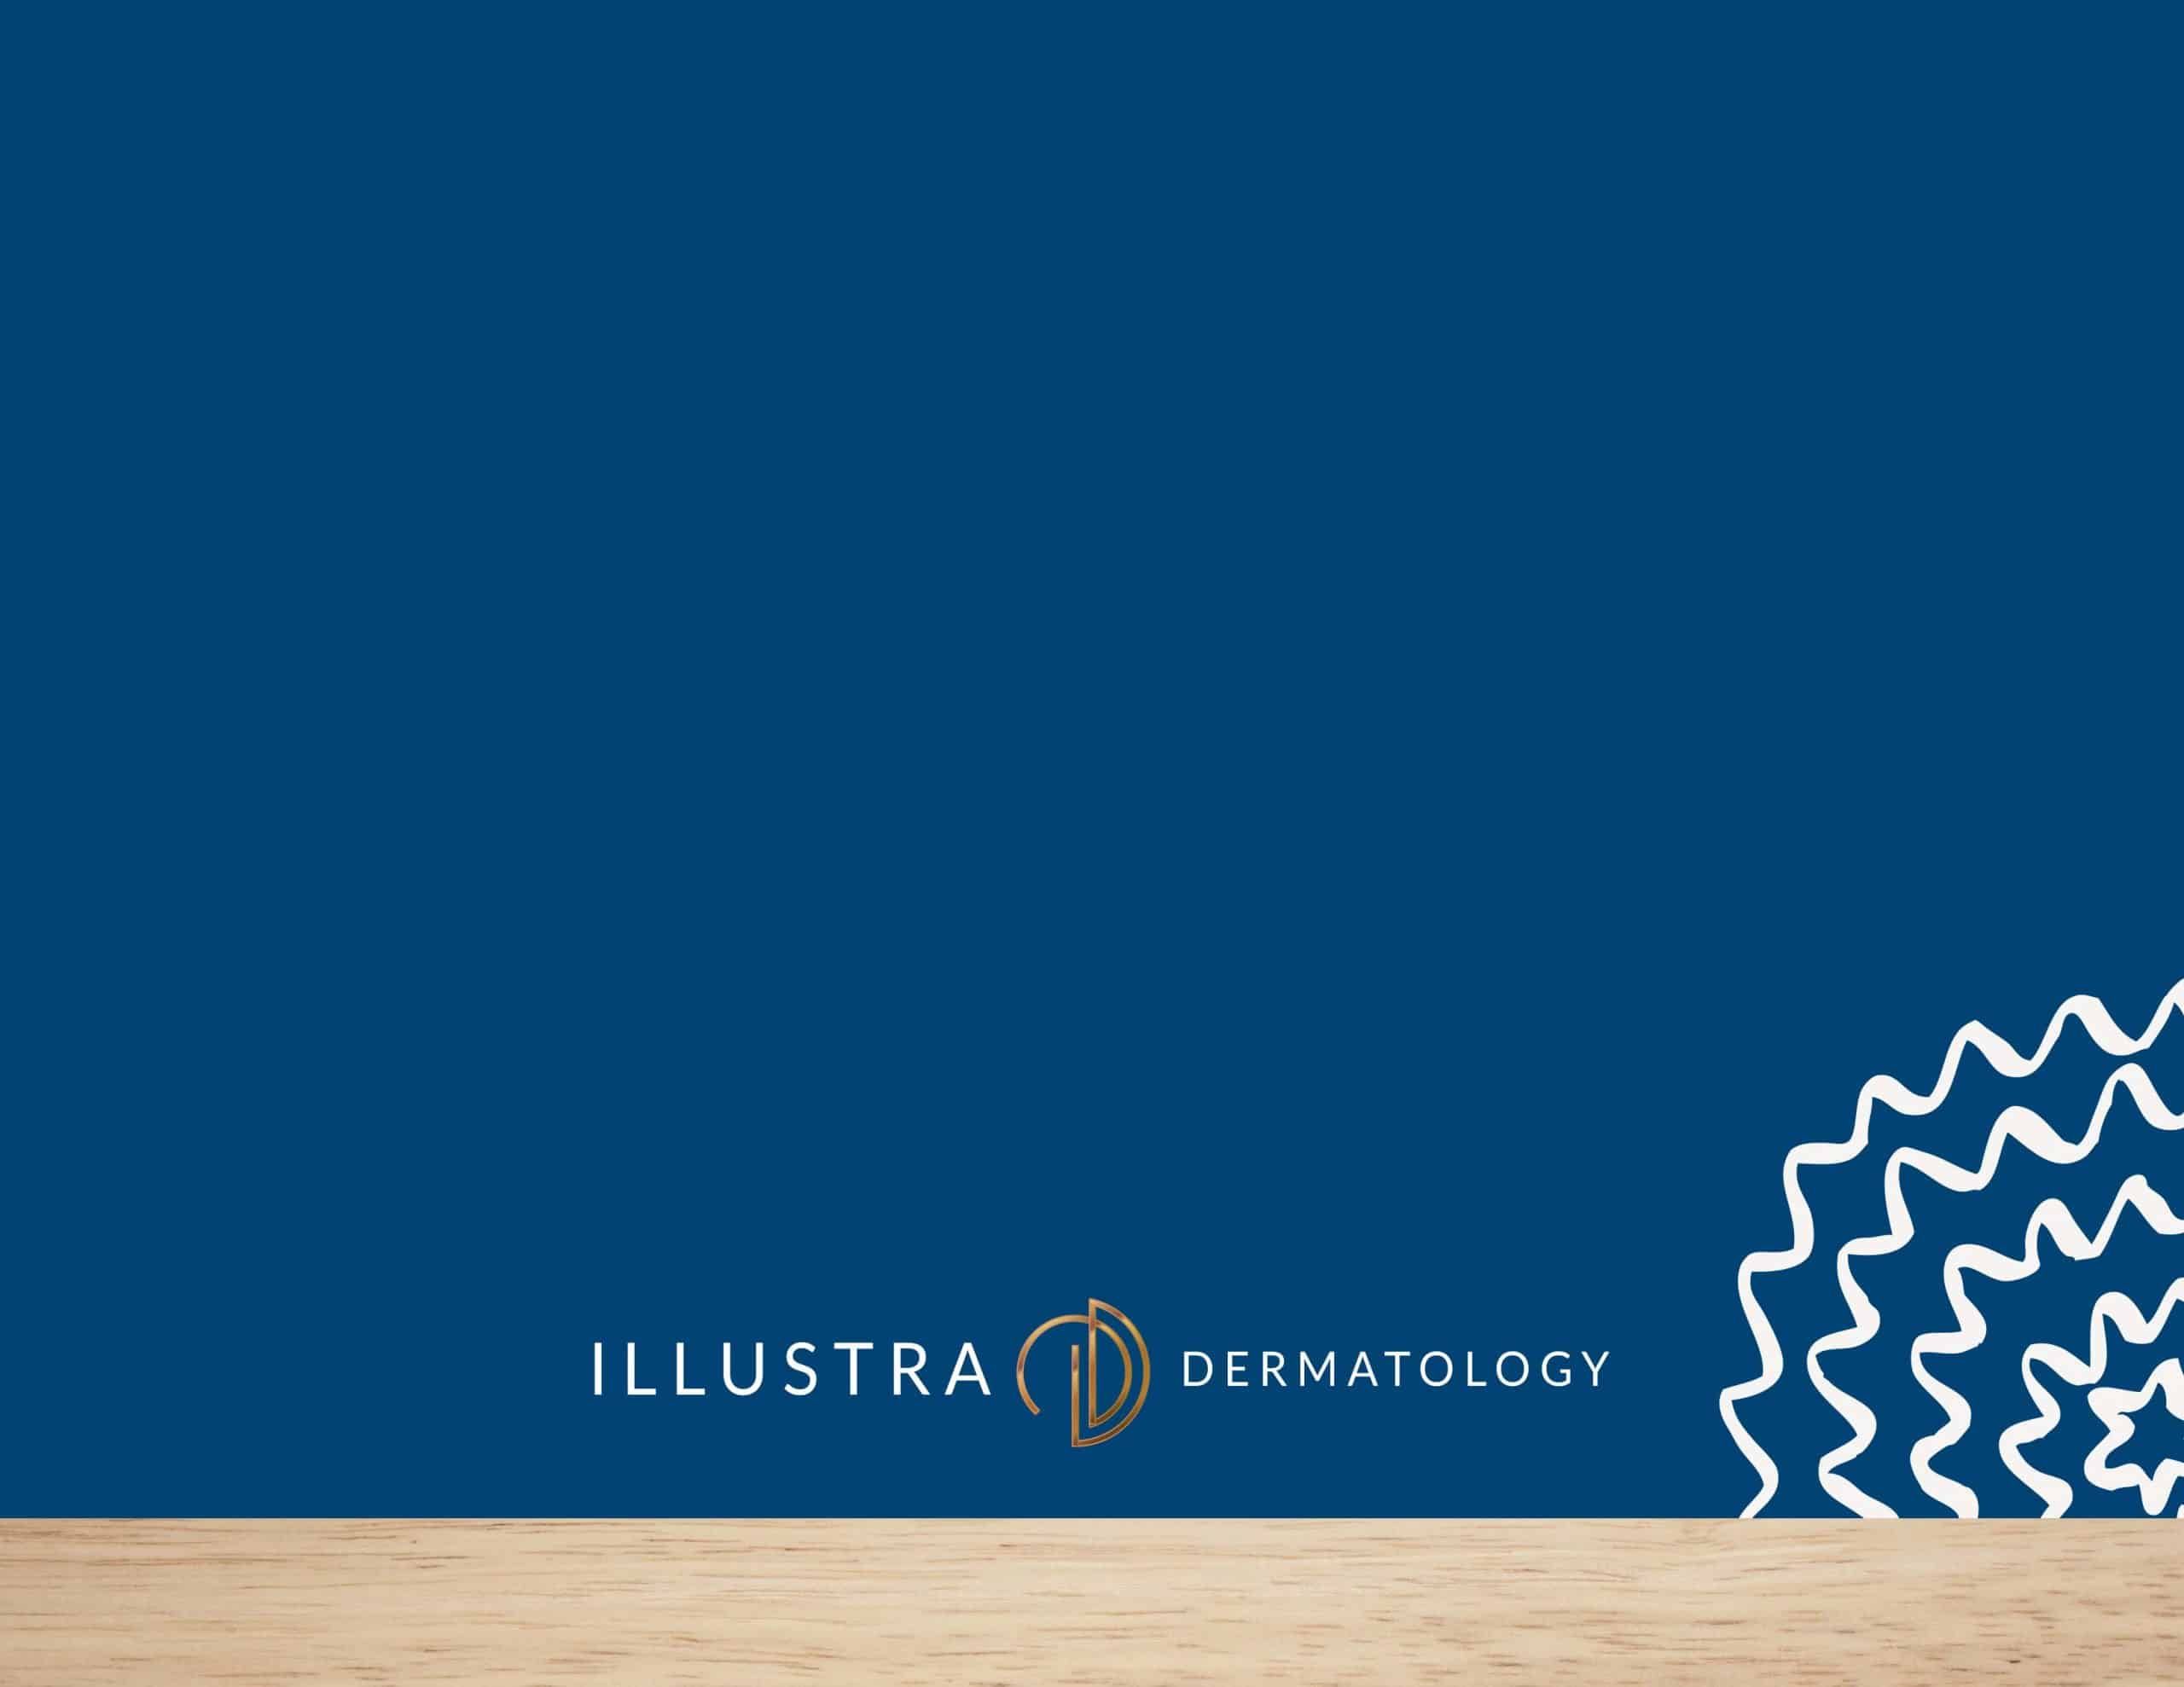 Illustra Dermatology Brand Guide - Back Cover